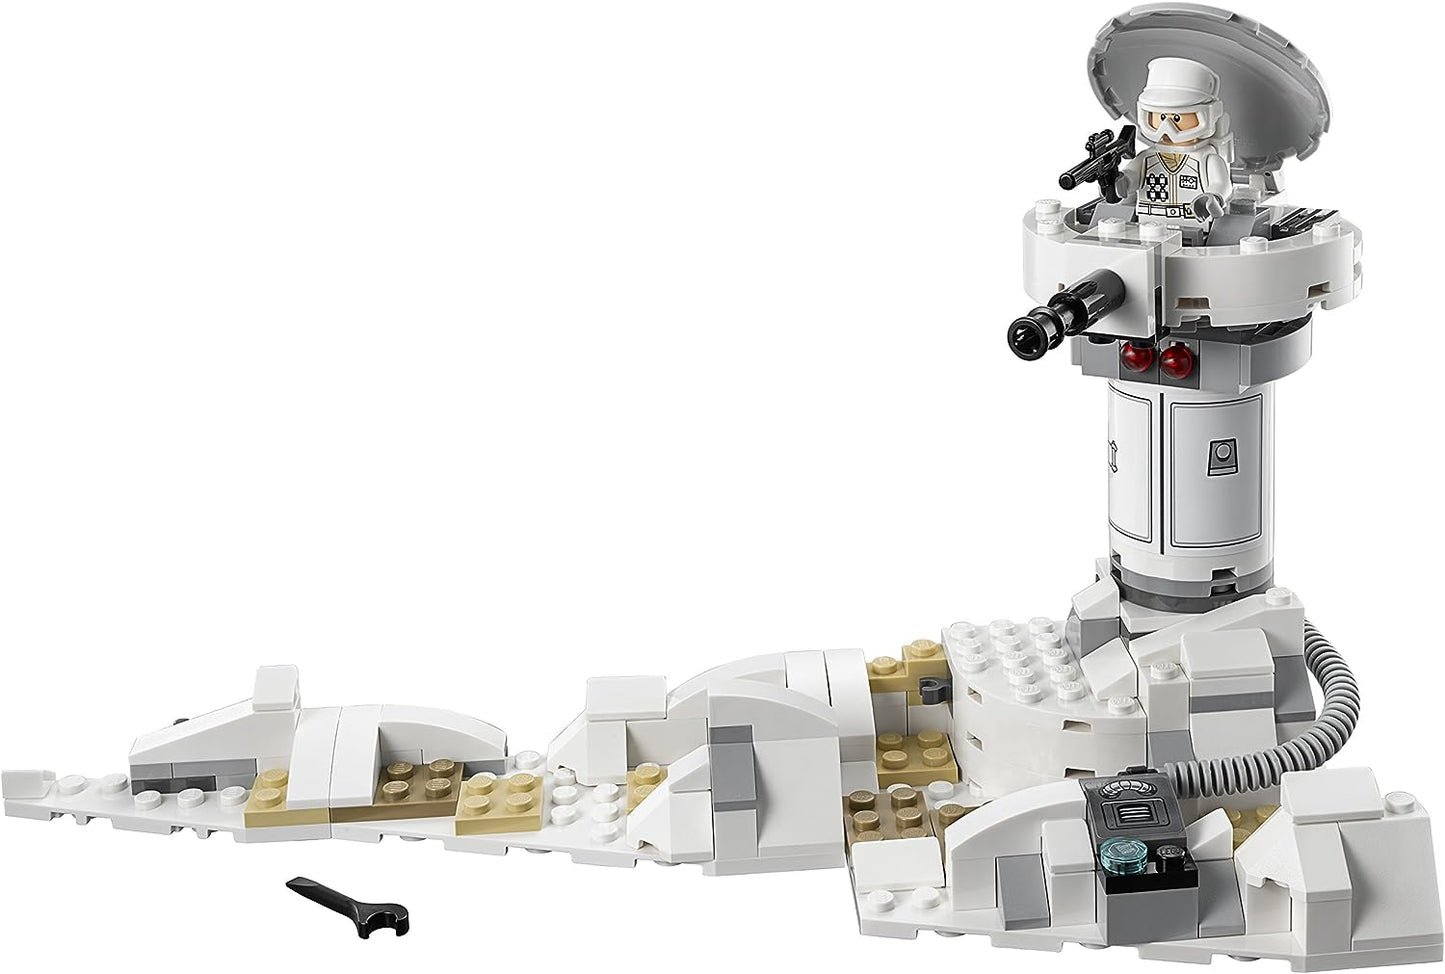 LEGO Star Wars Hoth Attack 75138